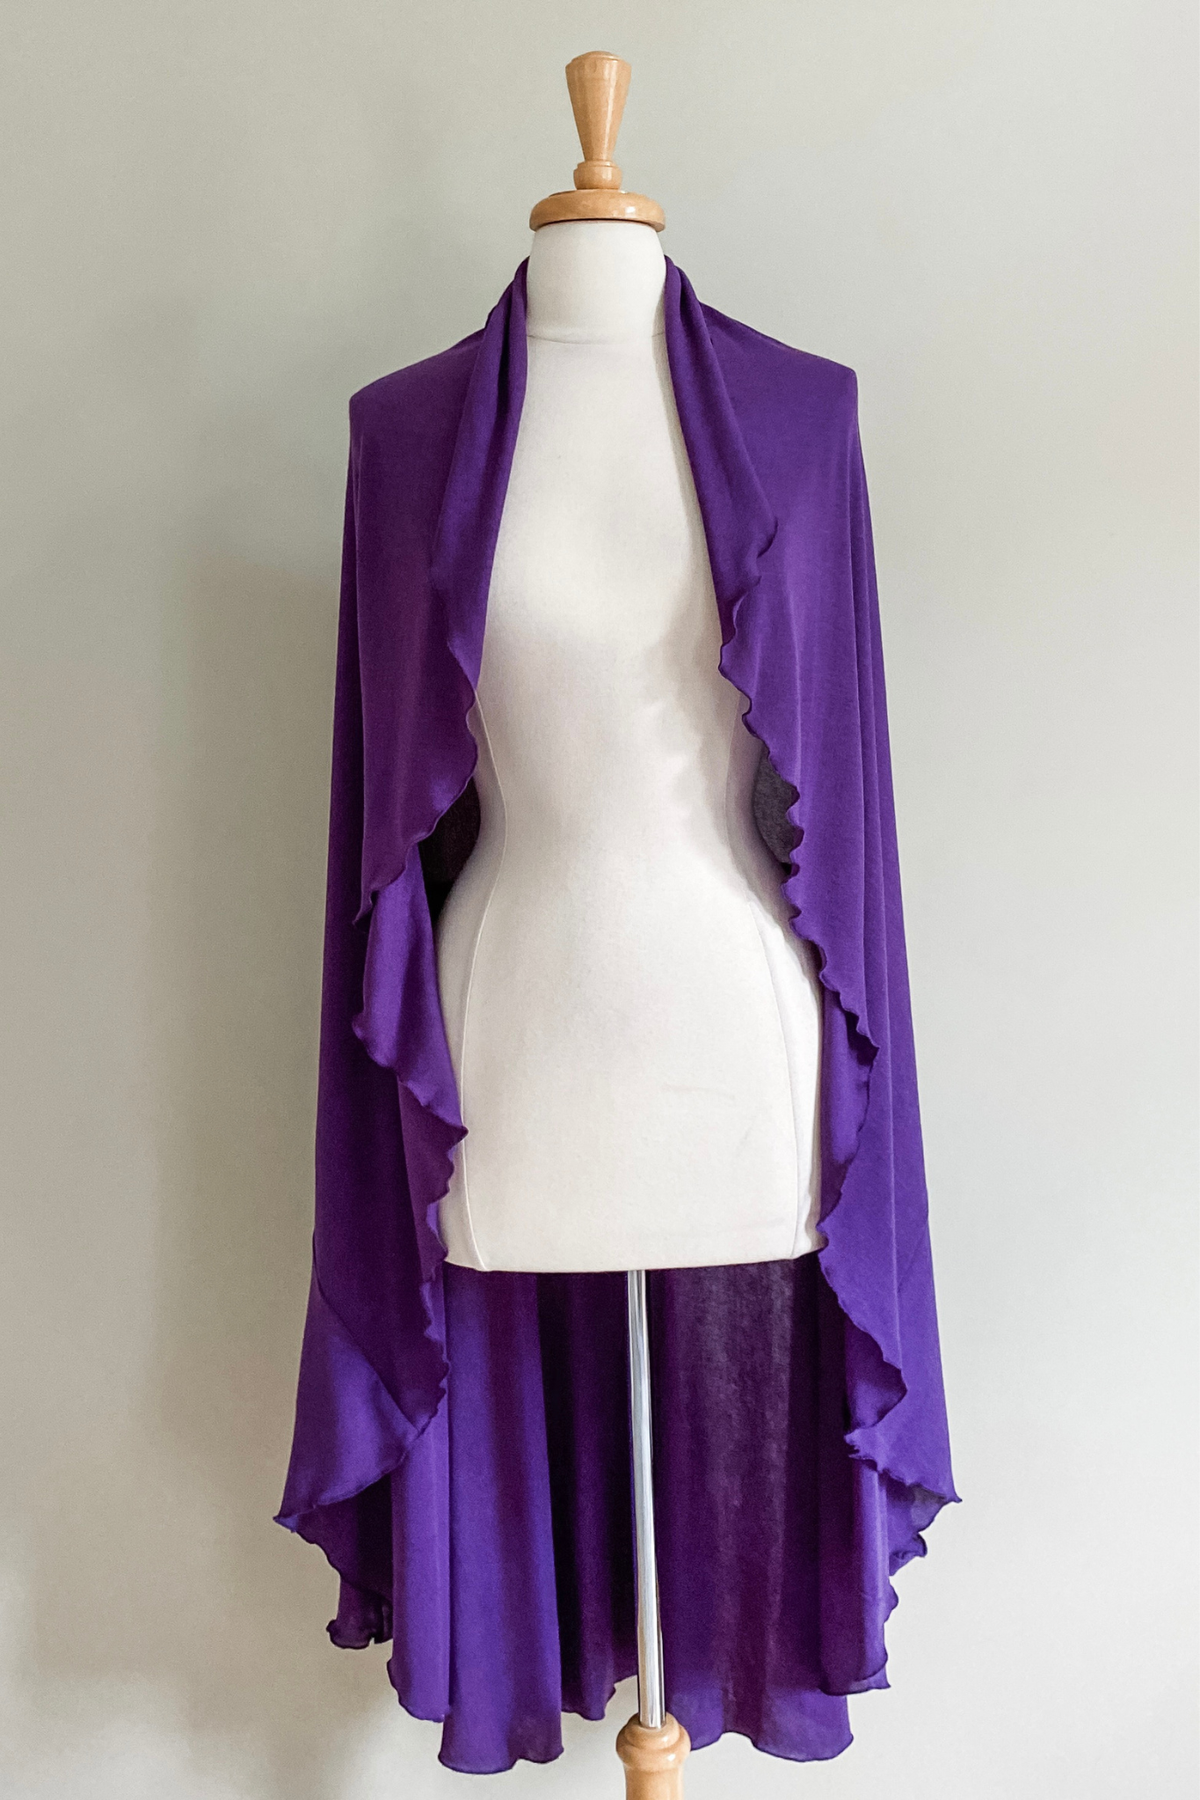 Infinity Flow Travel Cardigan in Purple color from Diane Kroe